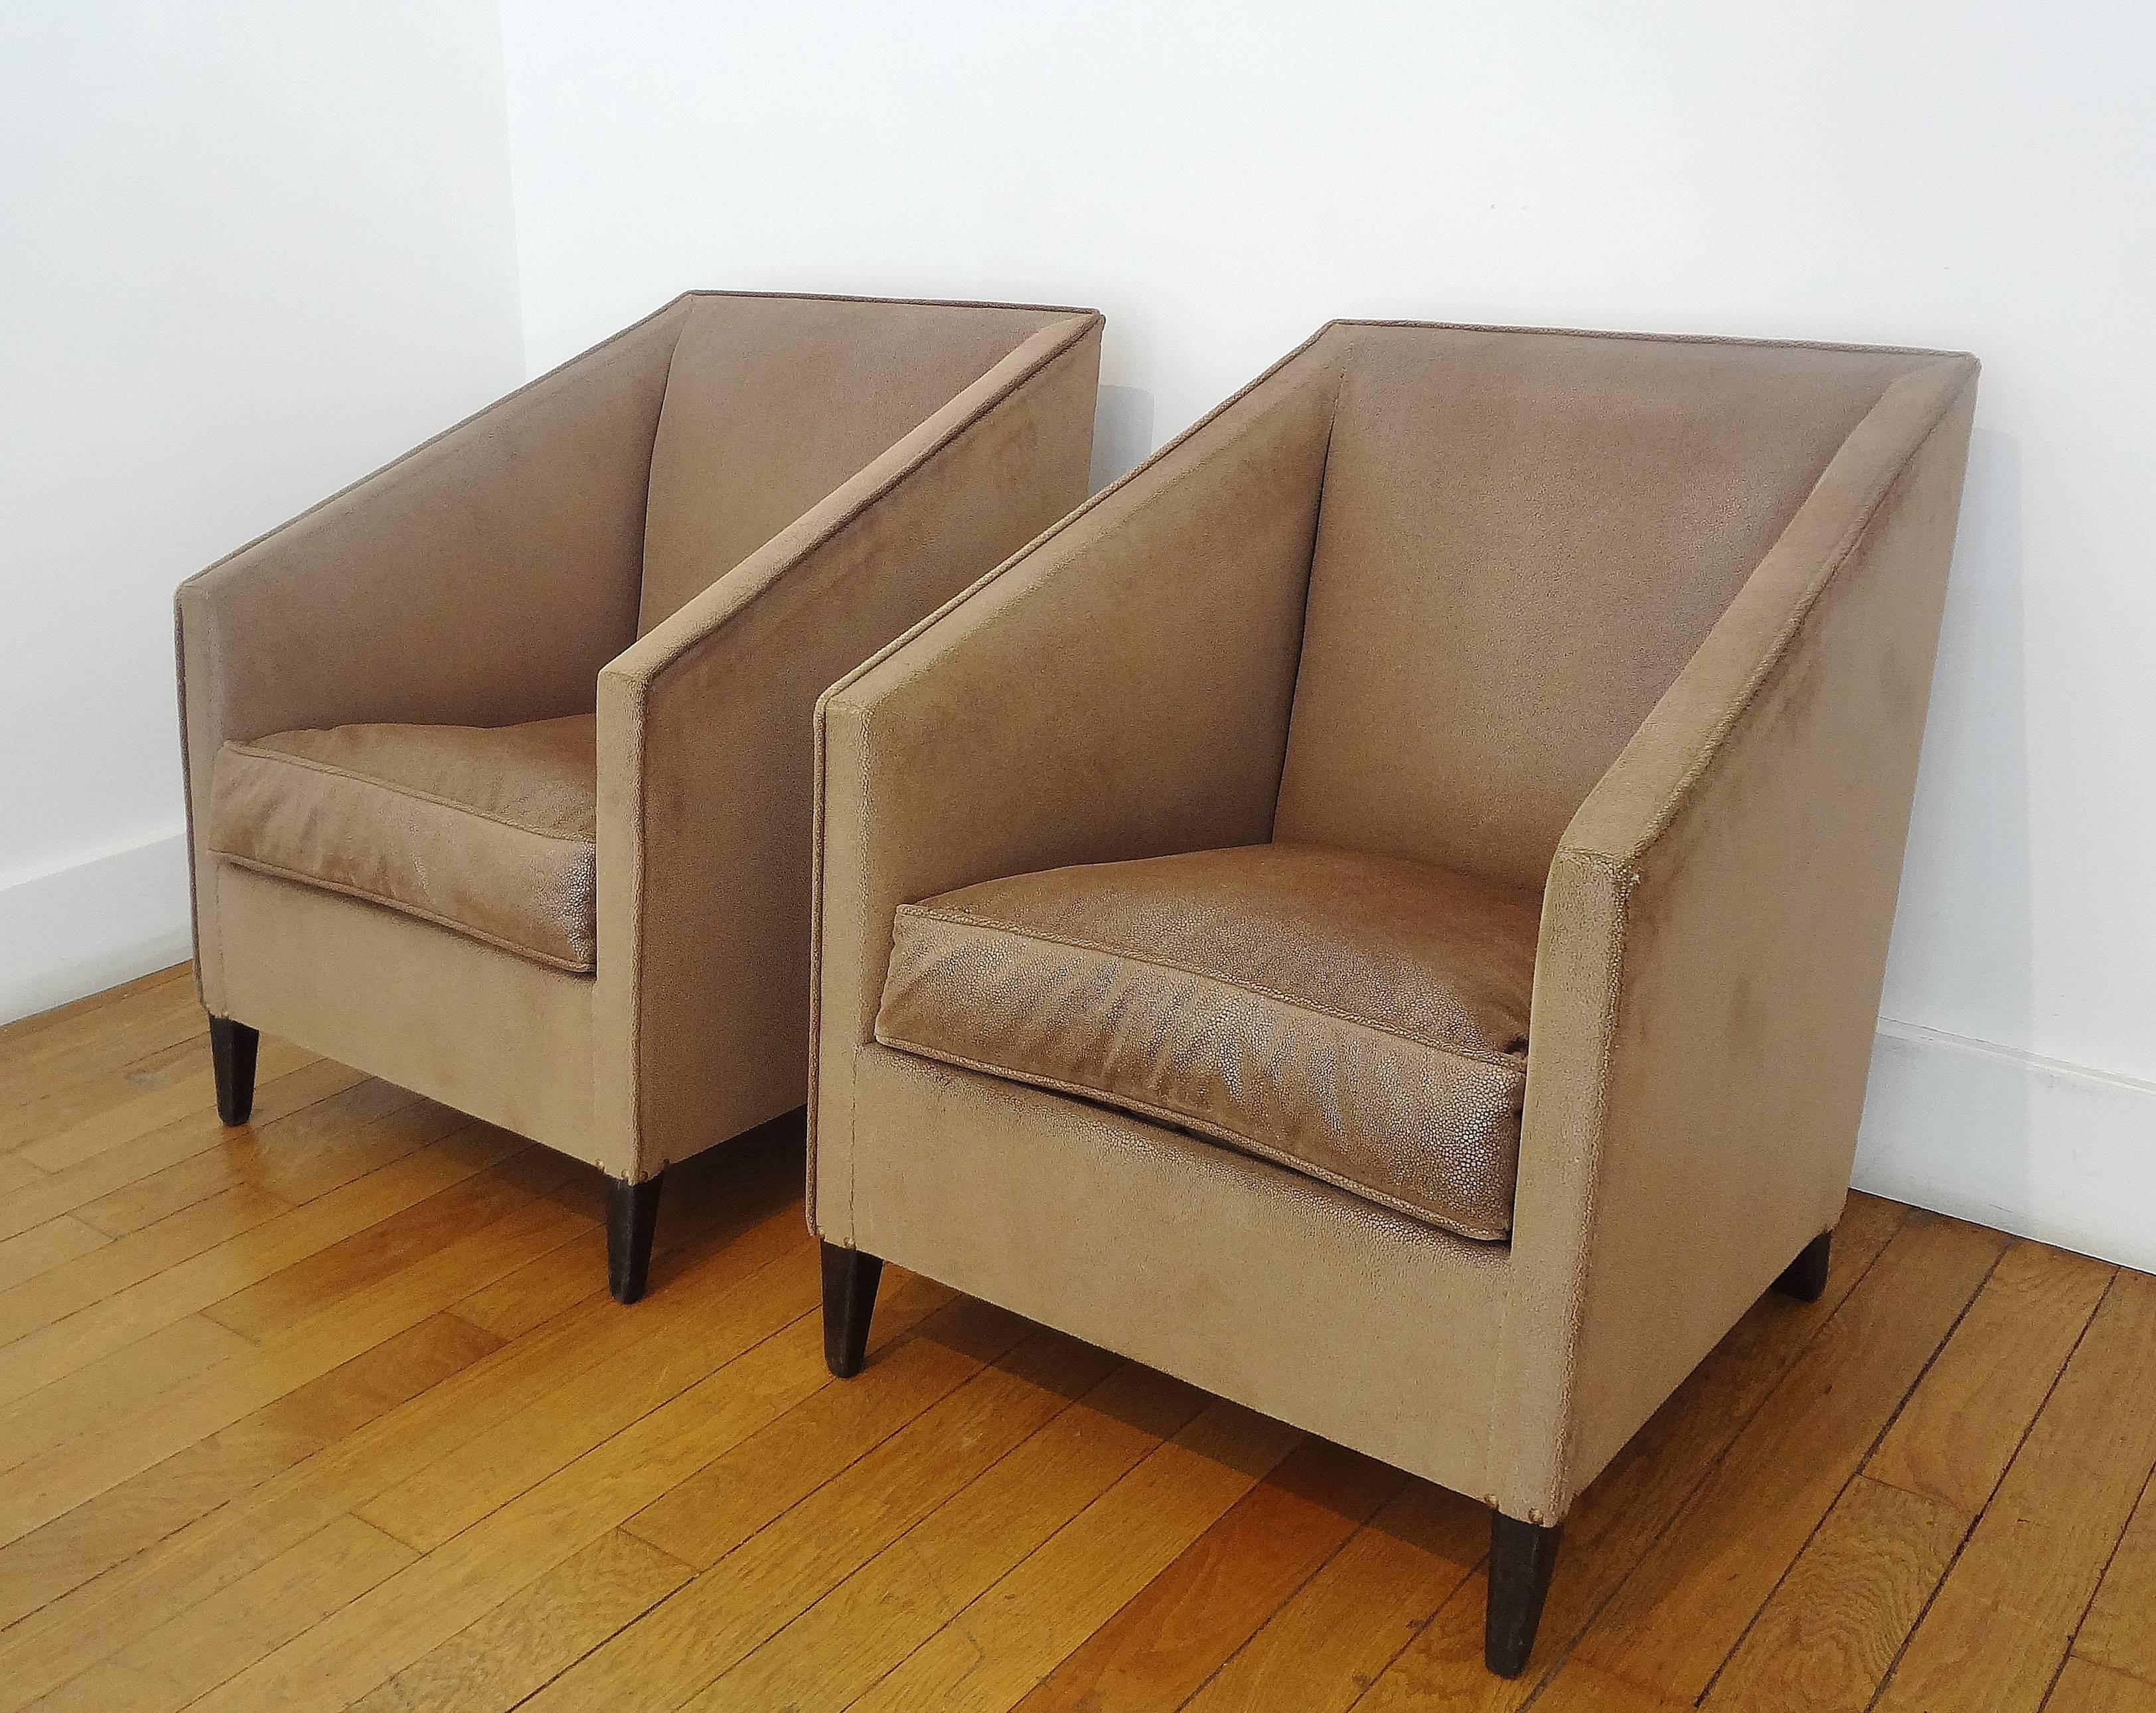 Rare pair of modernist armchairs, 1920s, by Francis Jourdain (Paris 1876-1958).
Angular elbow leggers. Seat cushion. Four Macassar ebony tinted beech feet.
Light brown galuchat-like velvet covering.
Haut.72 x larg.57 x prof.70 cm. Haut.assise 38